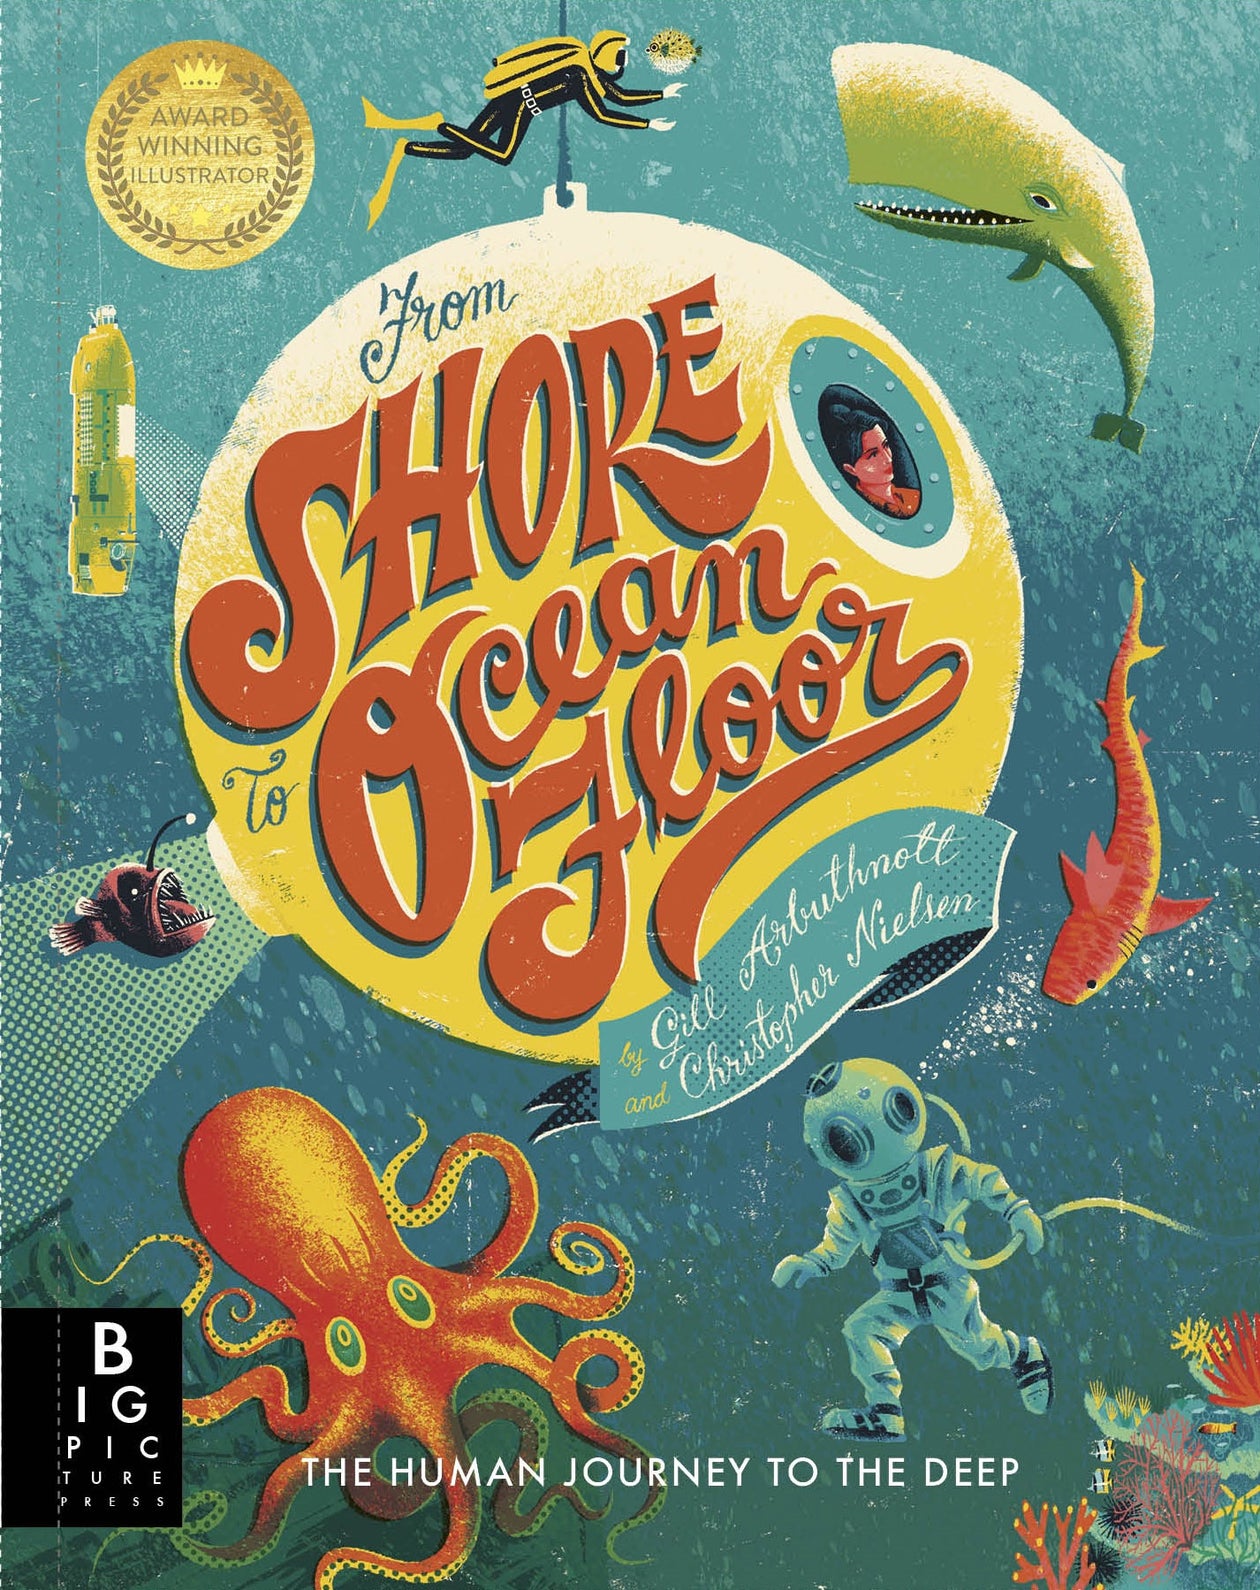 From Shore to Ocean Floor by Gill Arbuthnott, illustrated by Christopher Nielsen